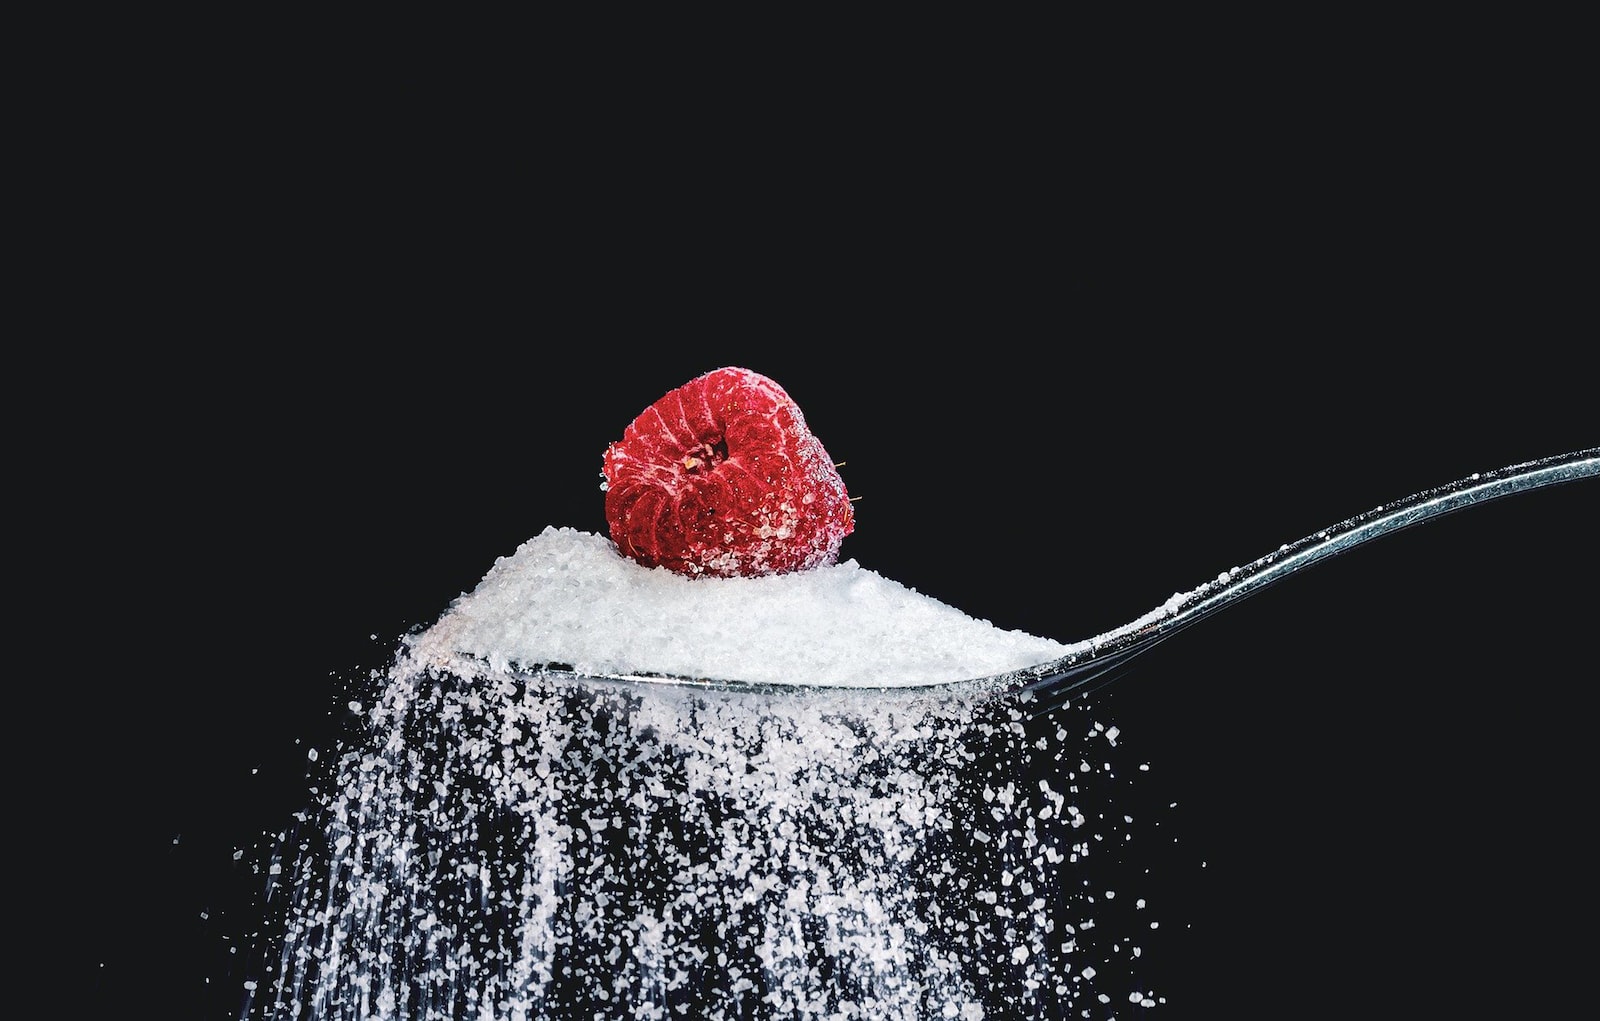 reducing sugar